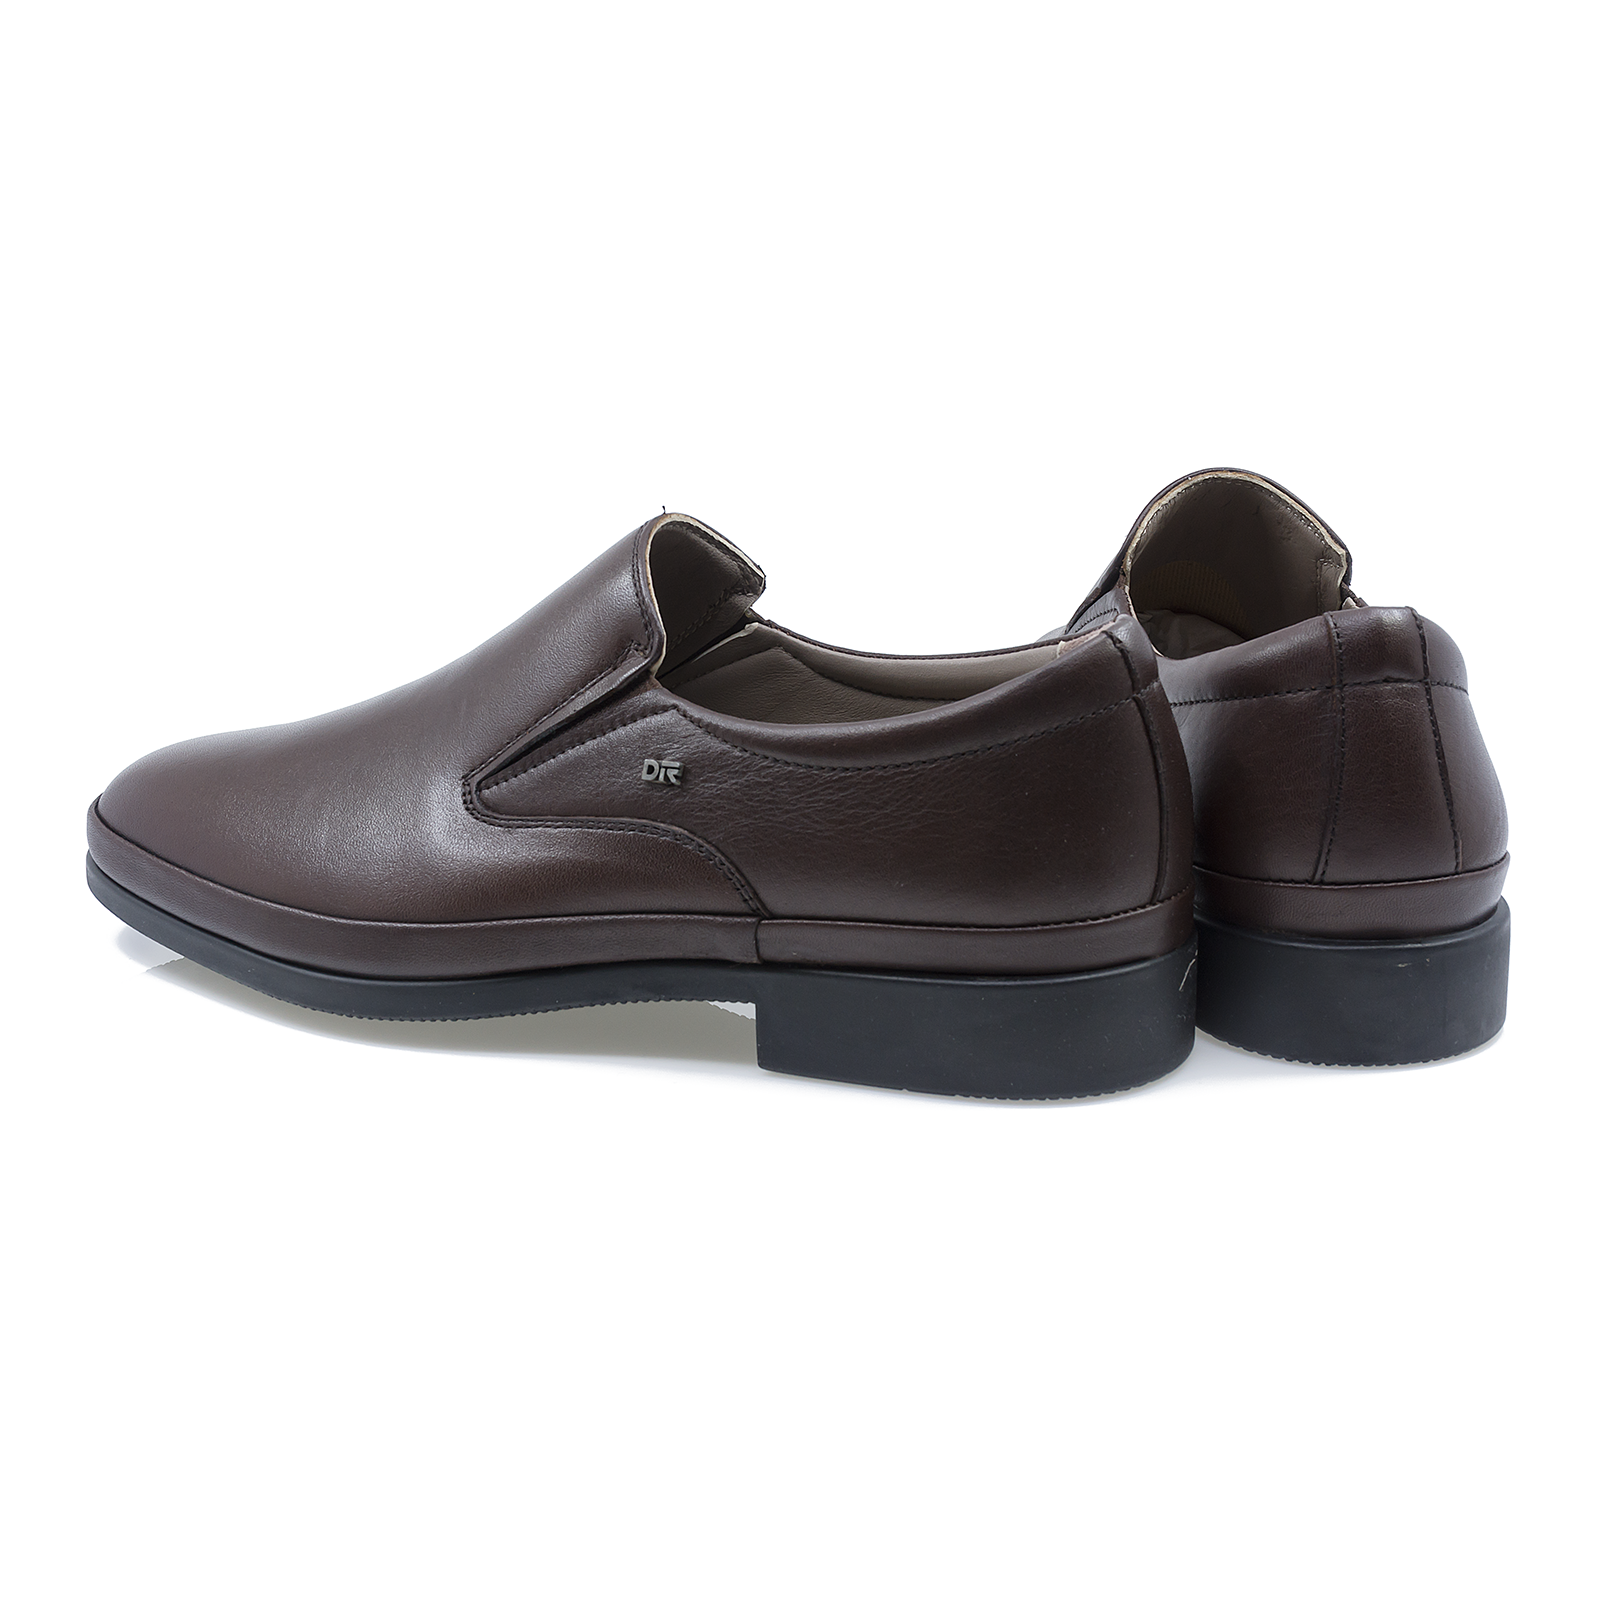 Pantofi-barbati-Dimport-106-eleganti-piele-naturala-maro-nouamoda-5